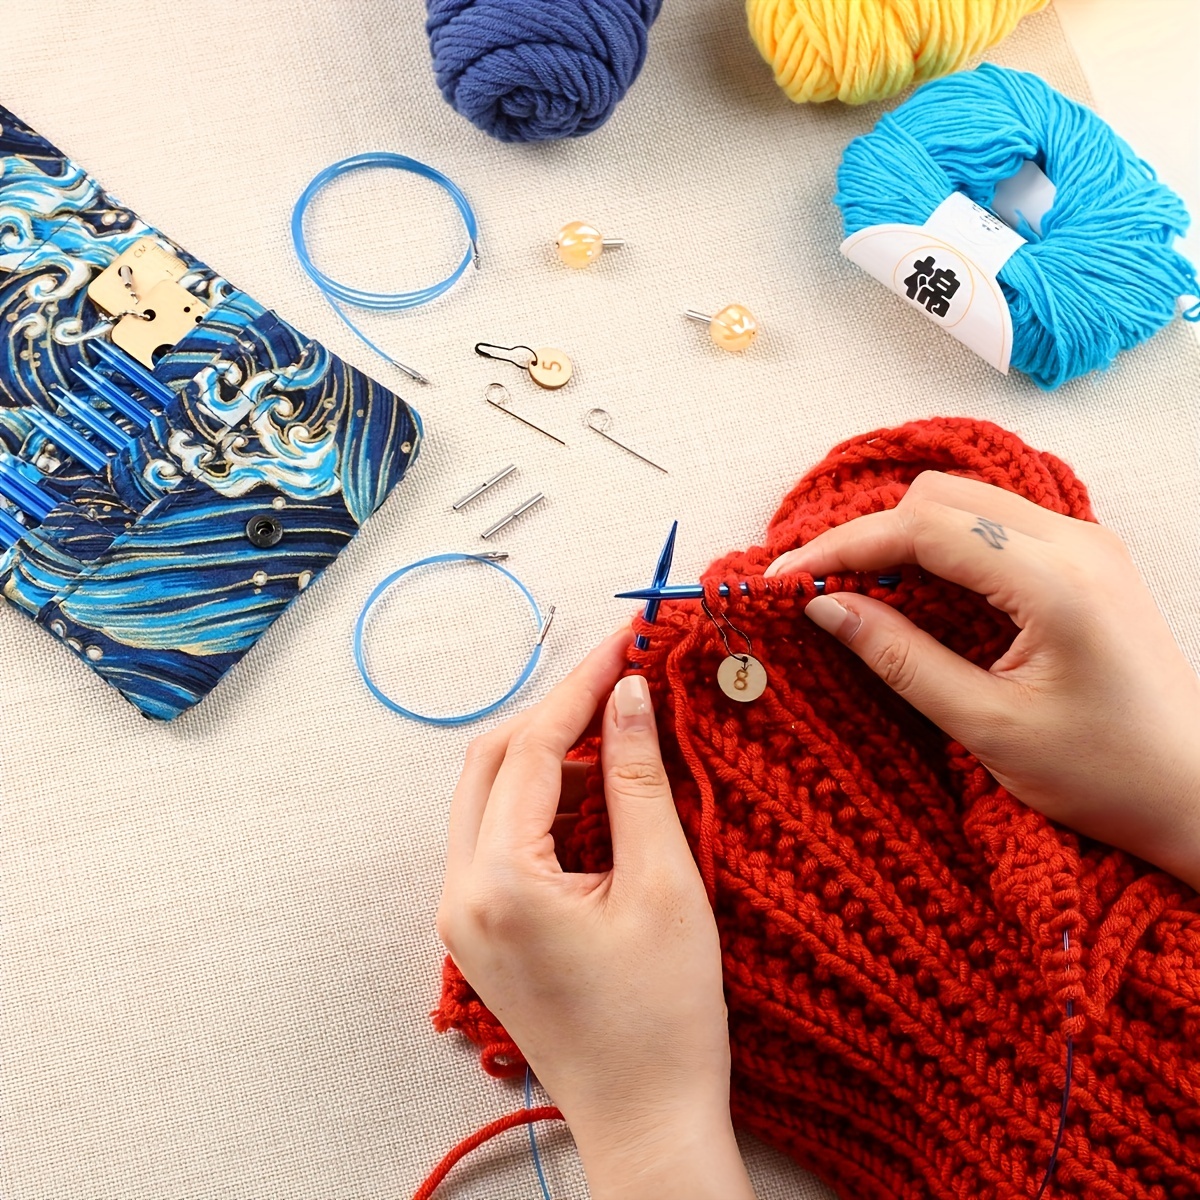 Crochet Knitting Needle Set, Aluminum Knitting Needles